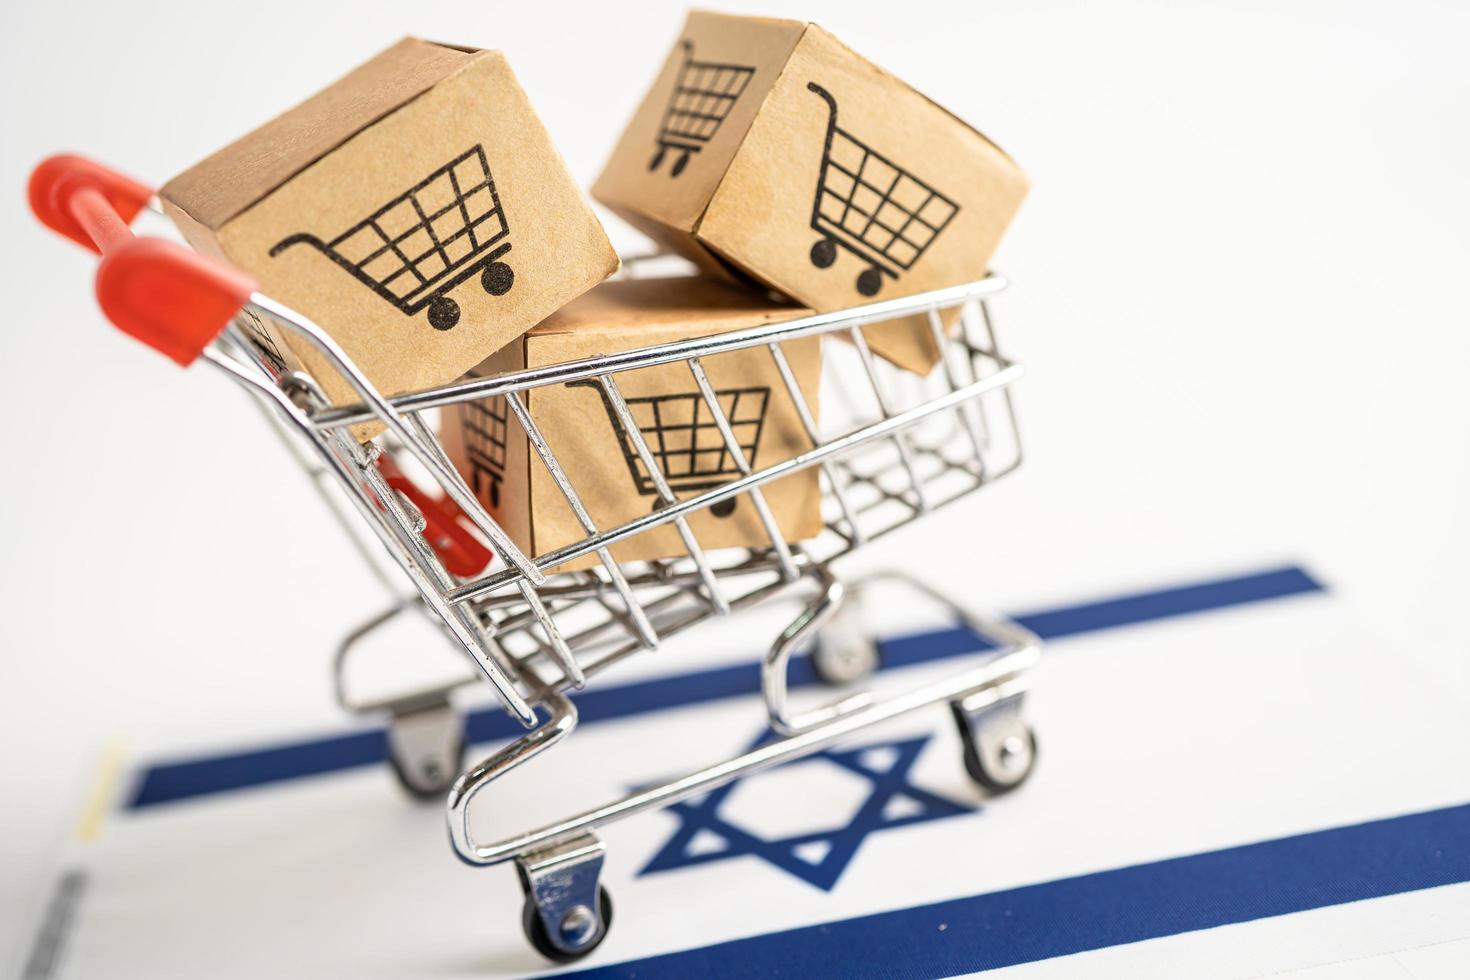 Box mit Warenkorb-Logo und Israel-Flagge, Import-Export-Shopping online oder E-Commerce-Finanz-Lieferservice-Shop Produktversand, Handel, Lieferantenkonzept. foto